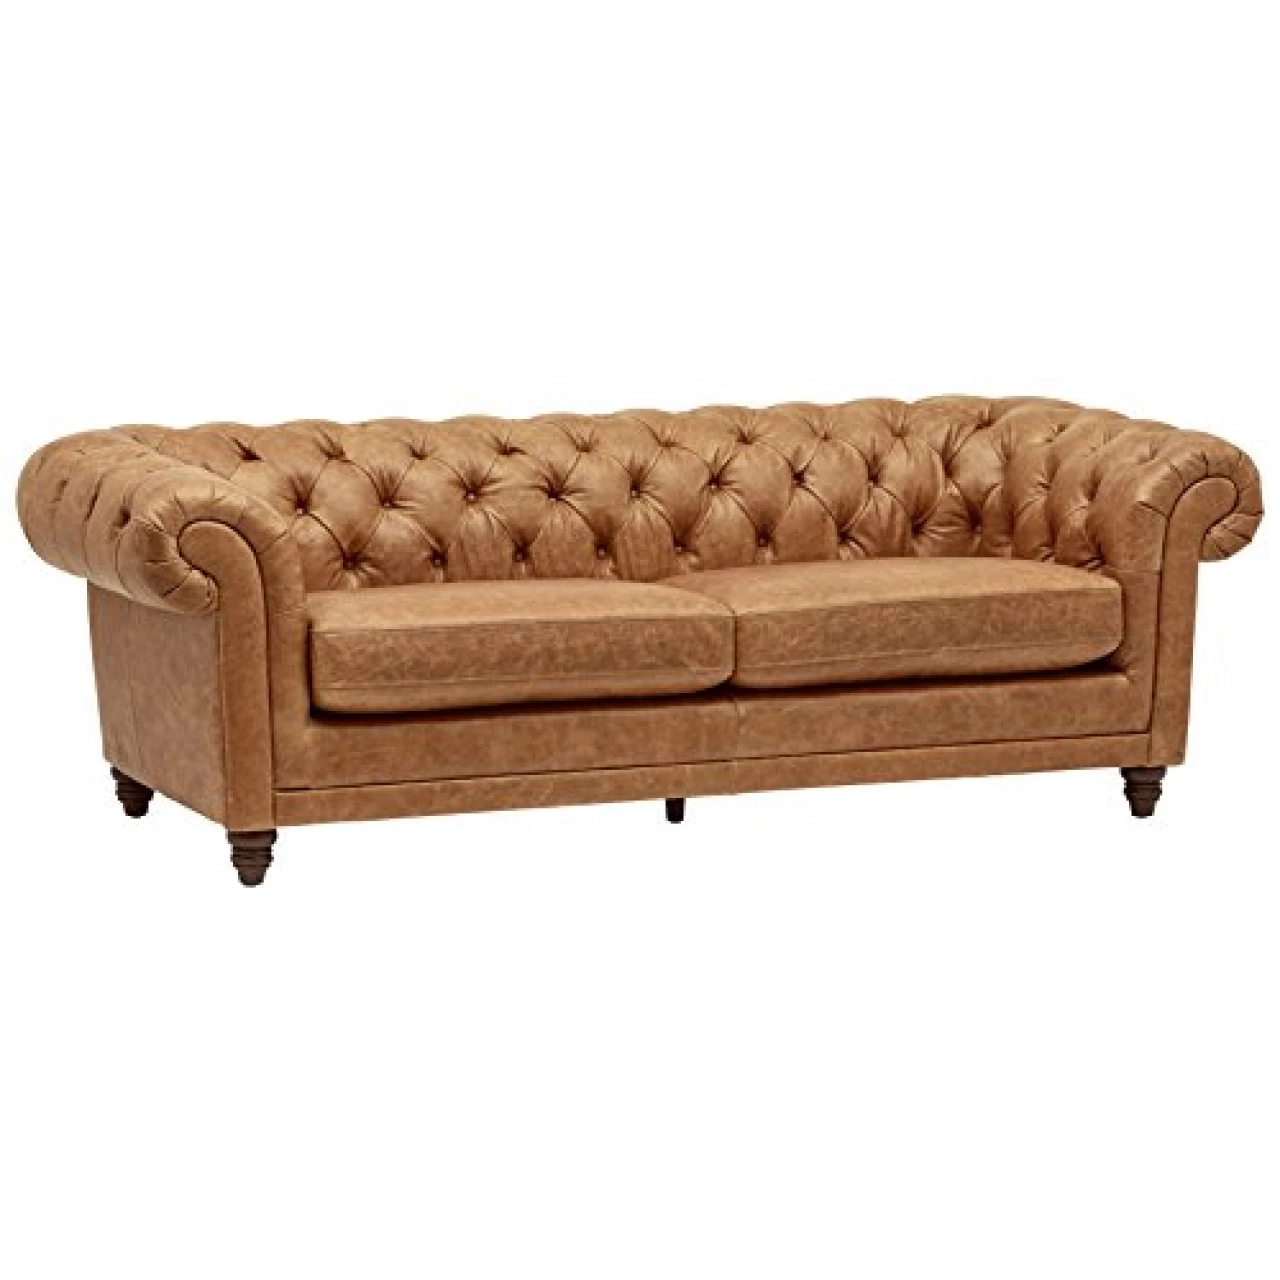 Amazon Brand - Stone &amp; Beam Bradbury Chesterfield Tufted Leather Sofa Couch, 93&quot;, Cognac